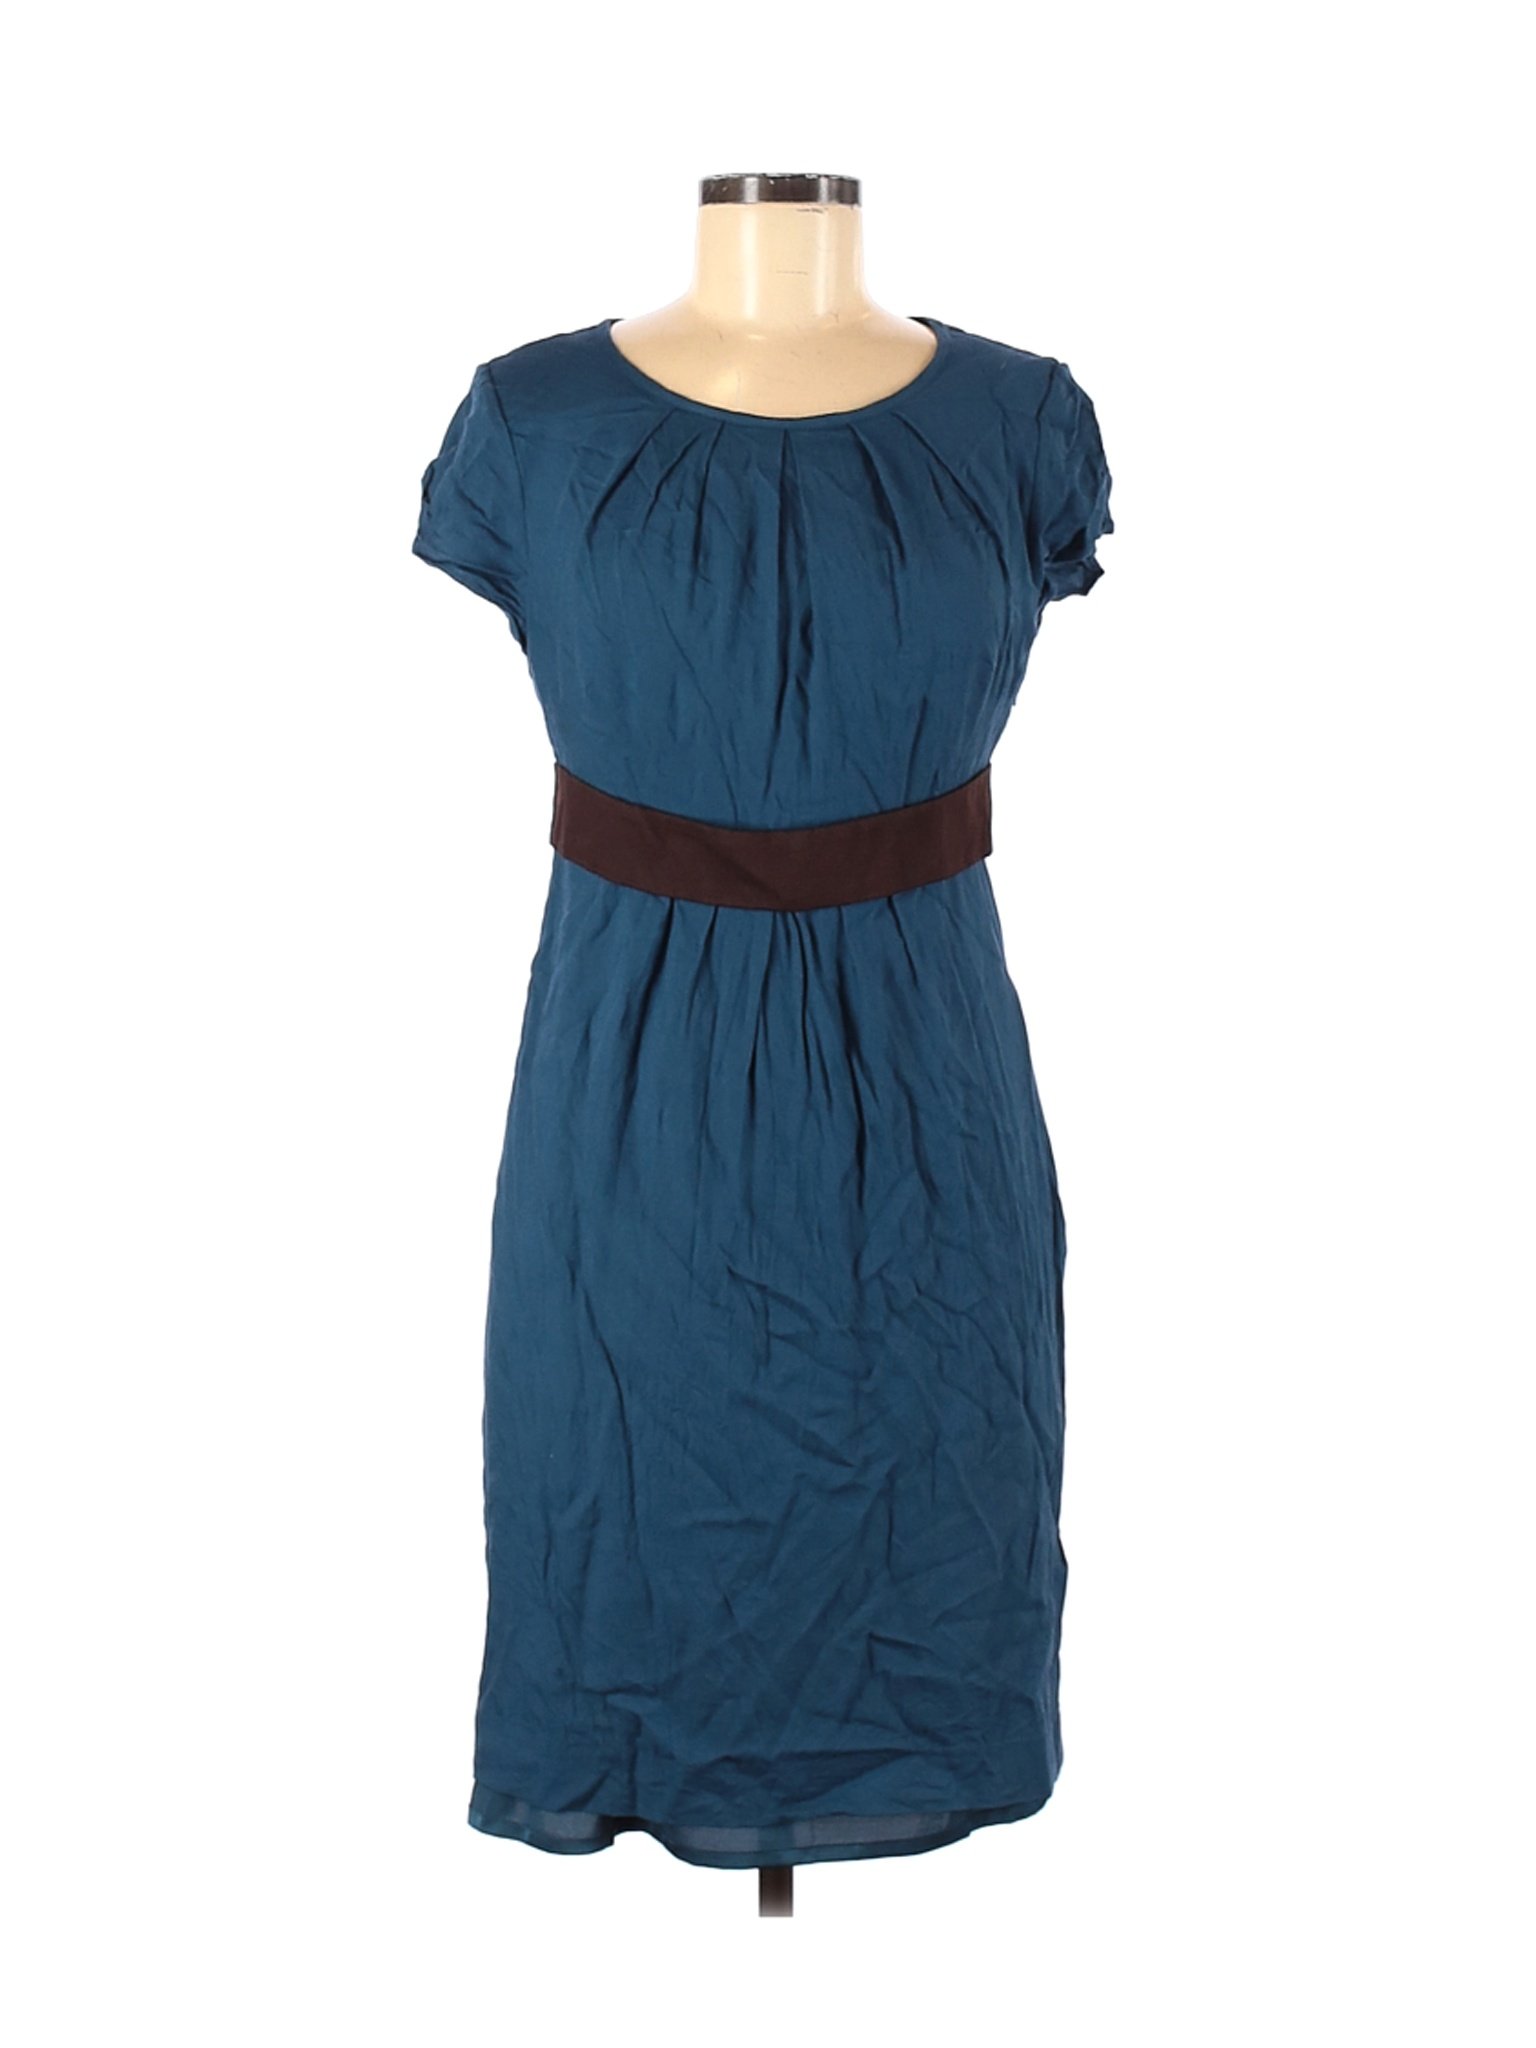 Boden Women Green Casual Dress 6 | eBay